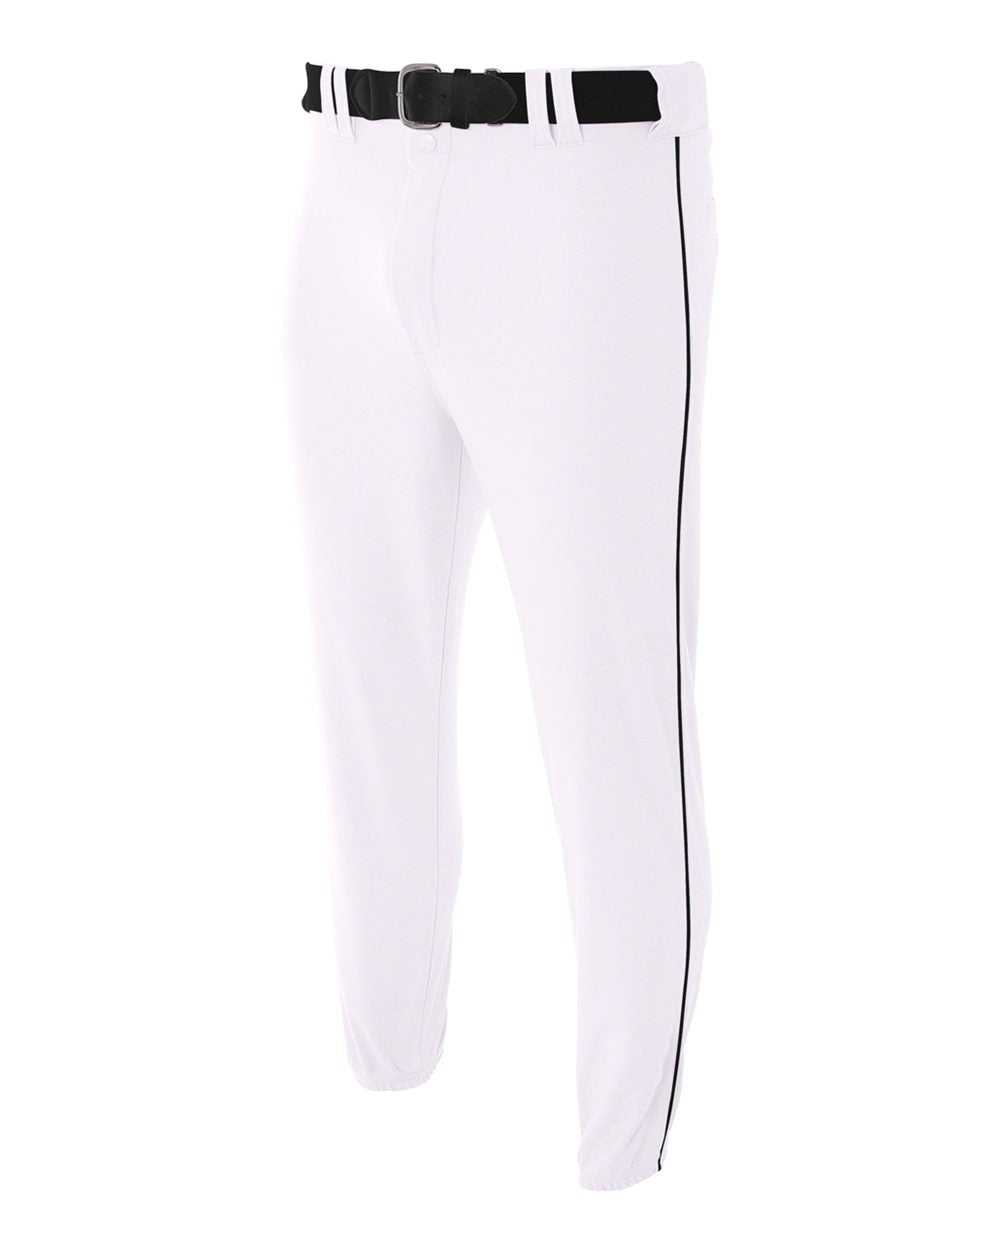 A4 N6178 Pro Style Elastic Bottom Baseball Pant - White Black - HIT a Double